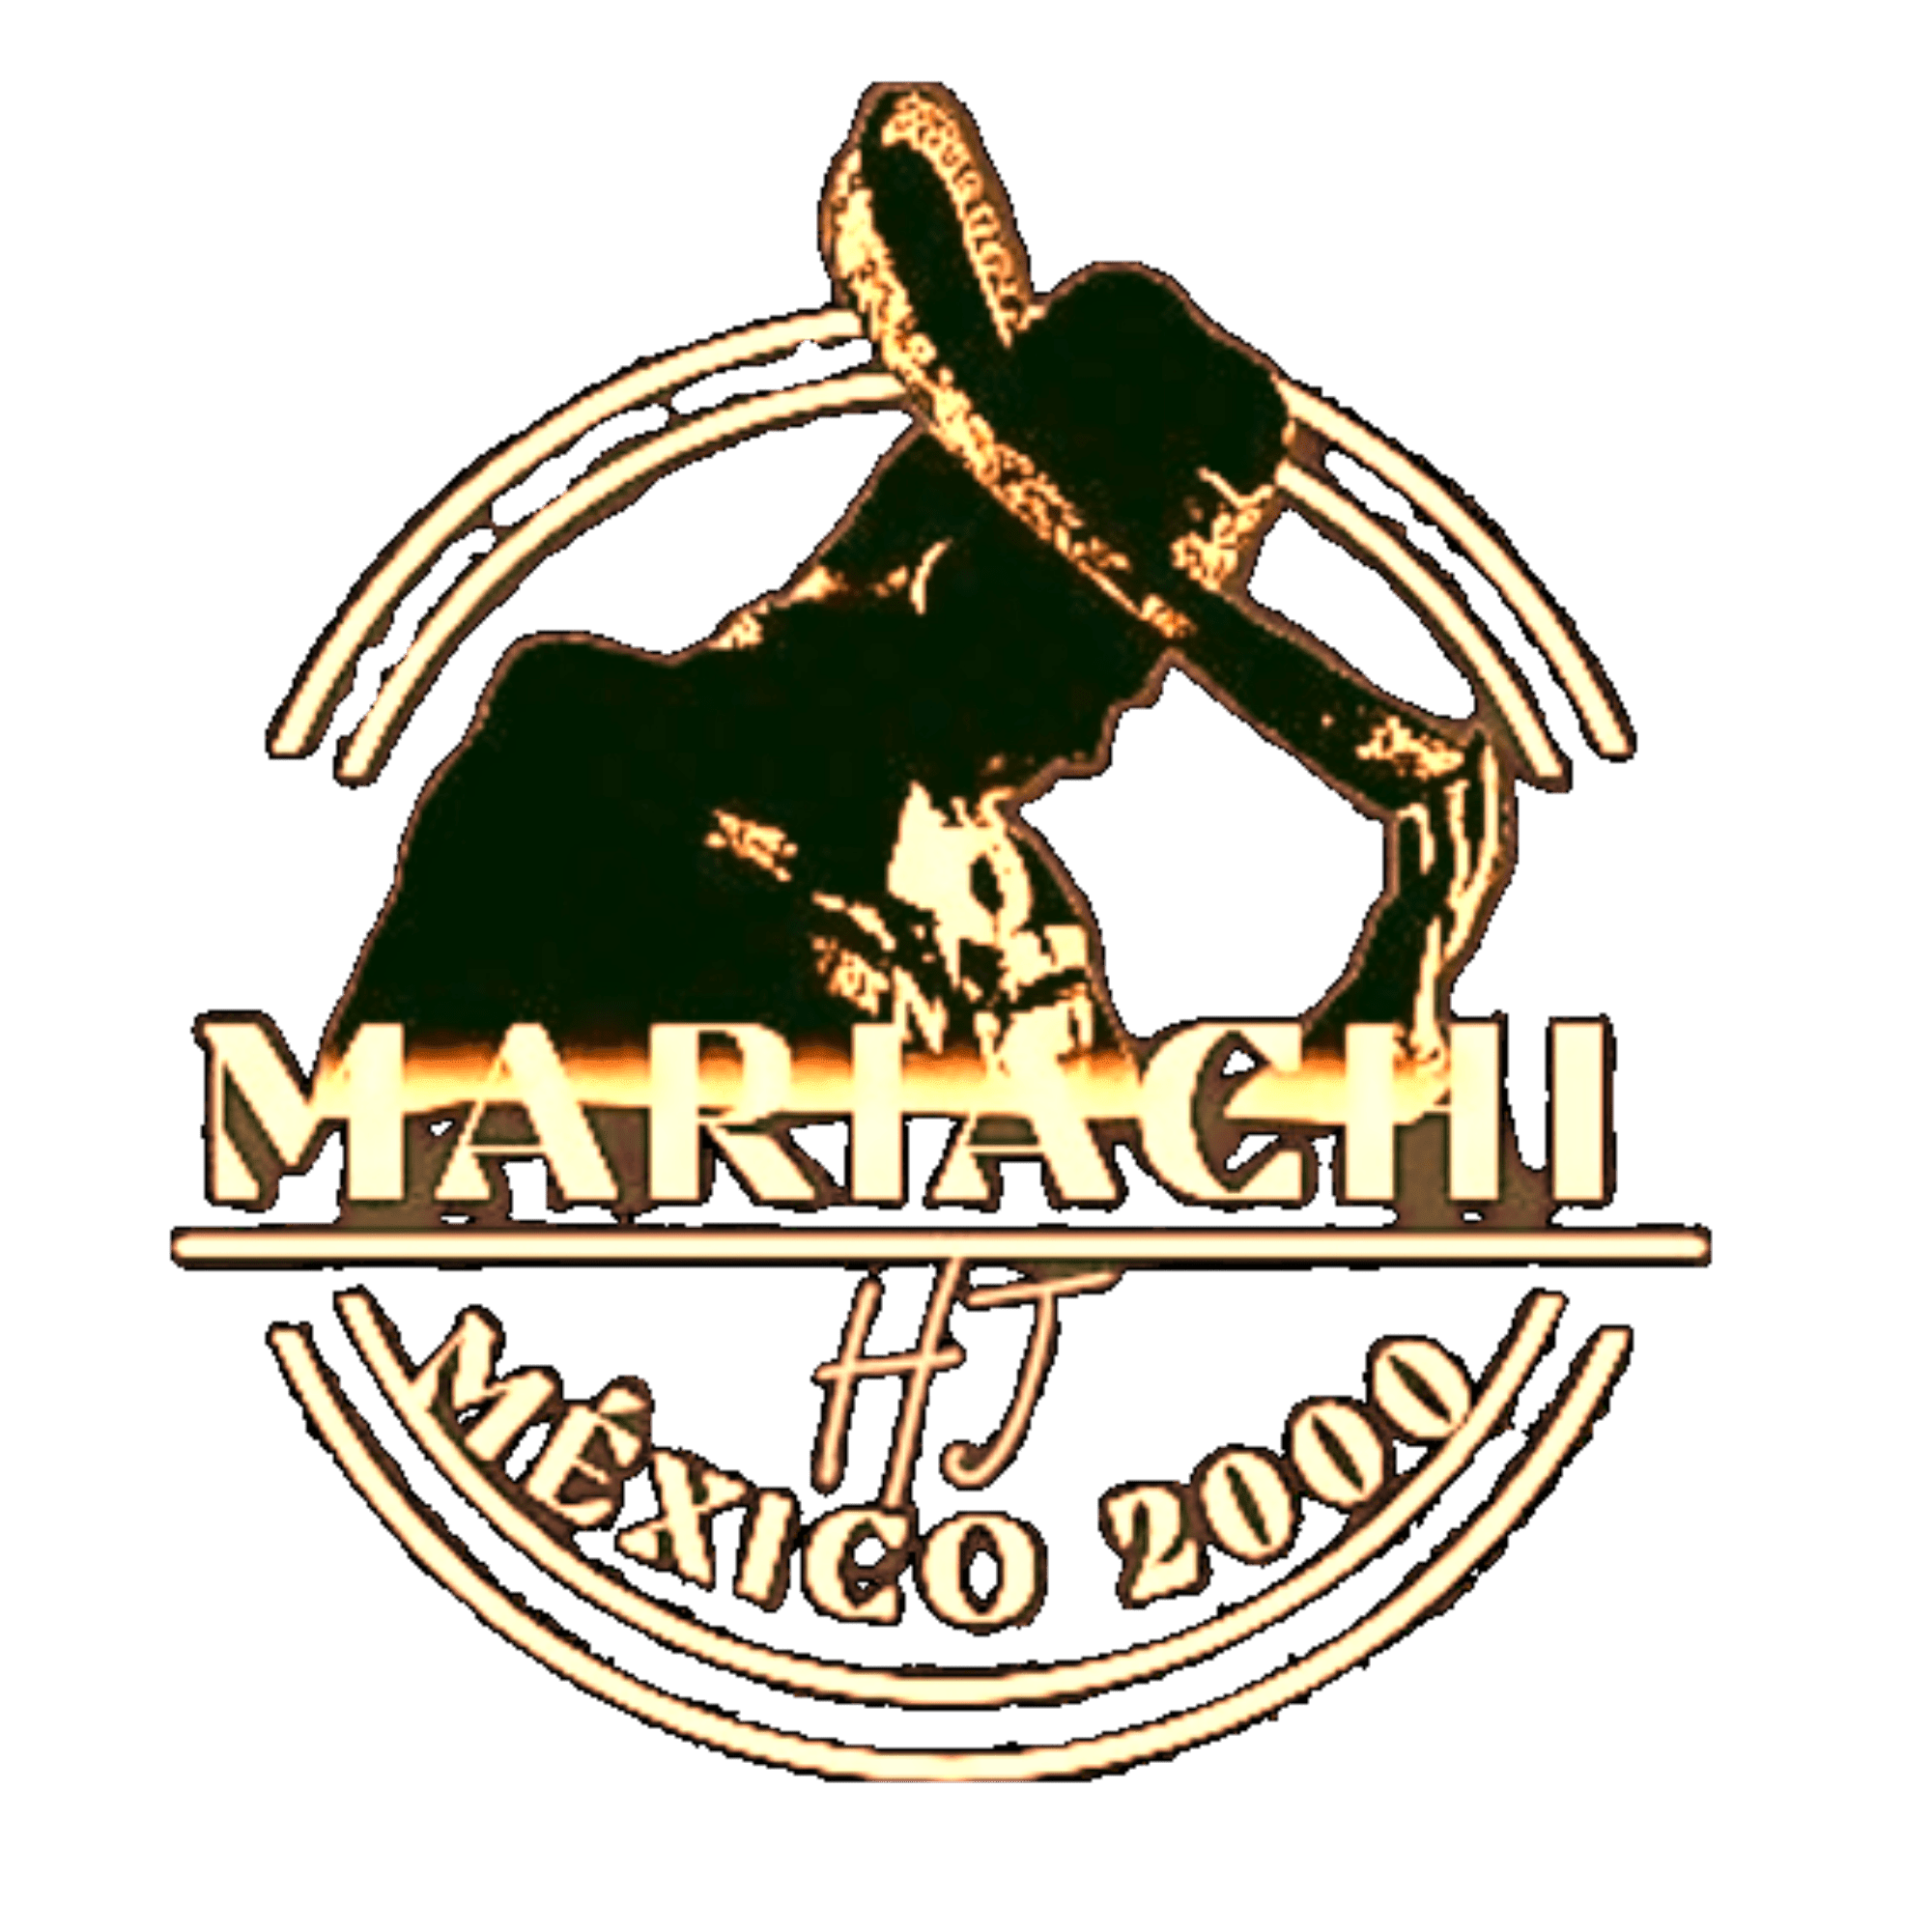 Mariachi México 2000HJ